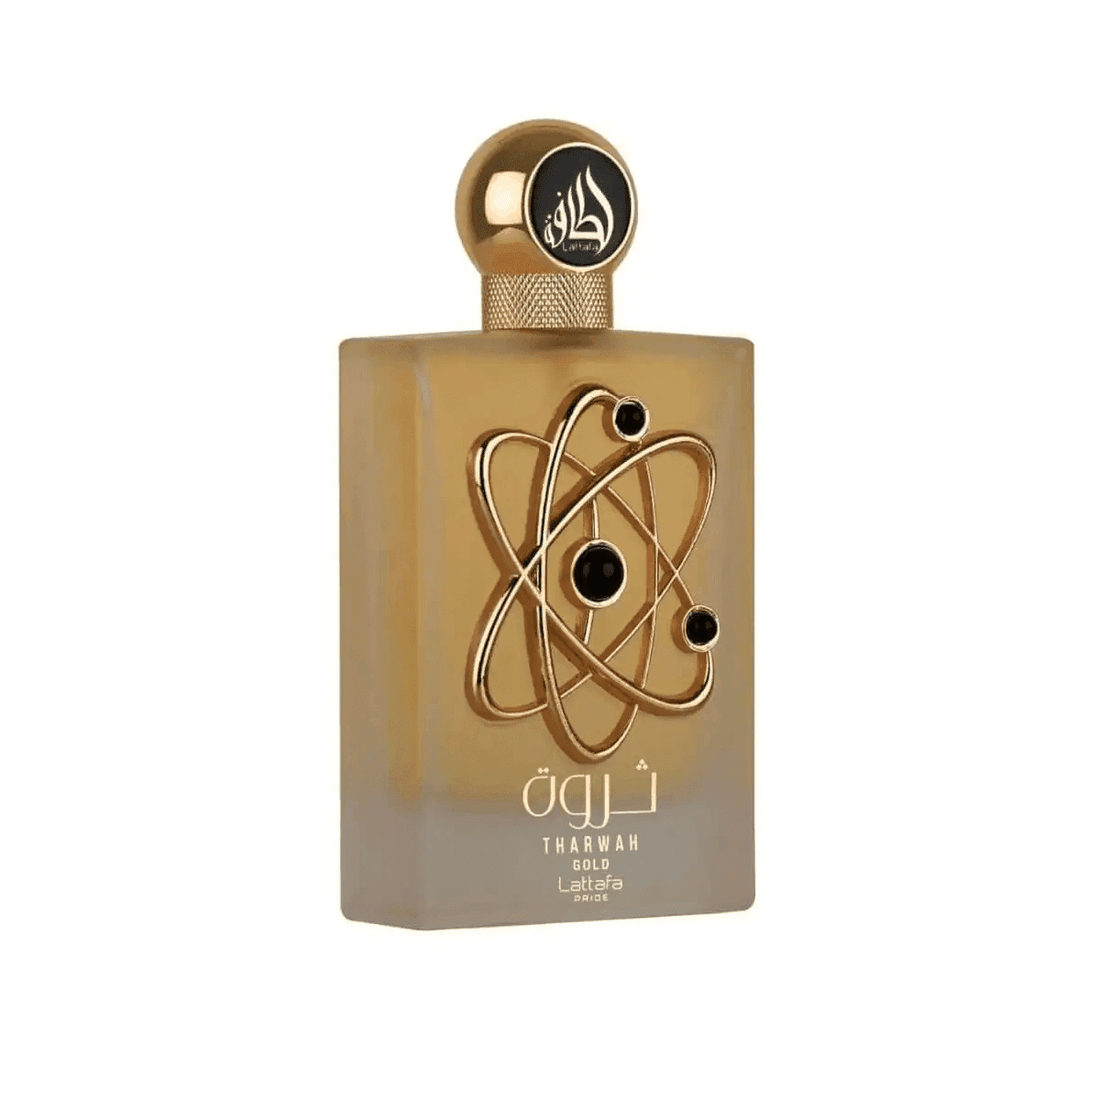 . Image of Tharwah Gold bottle - "Tharwah Gold Eau de Parfum by Lattafa Pride